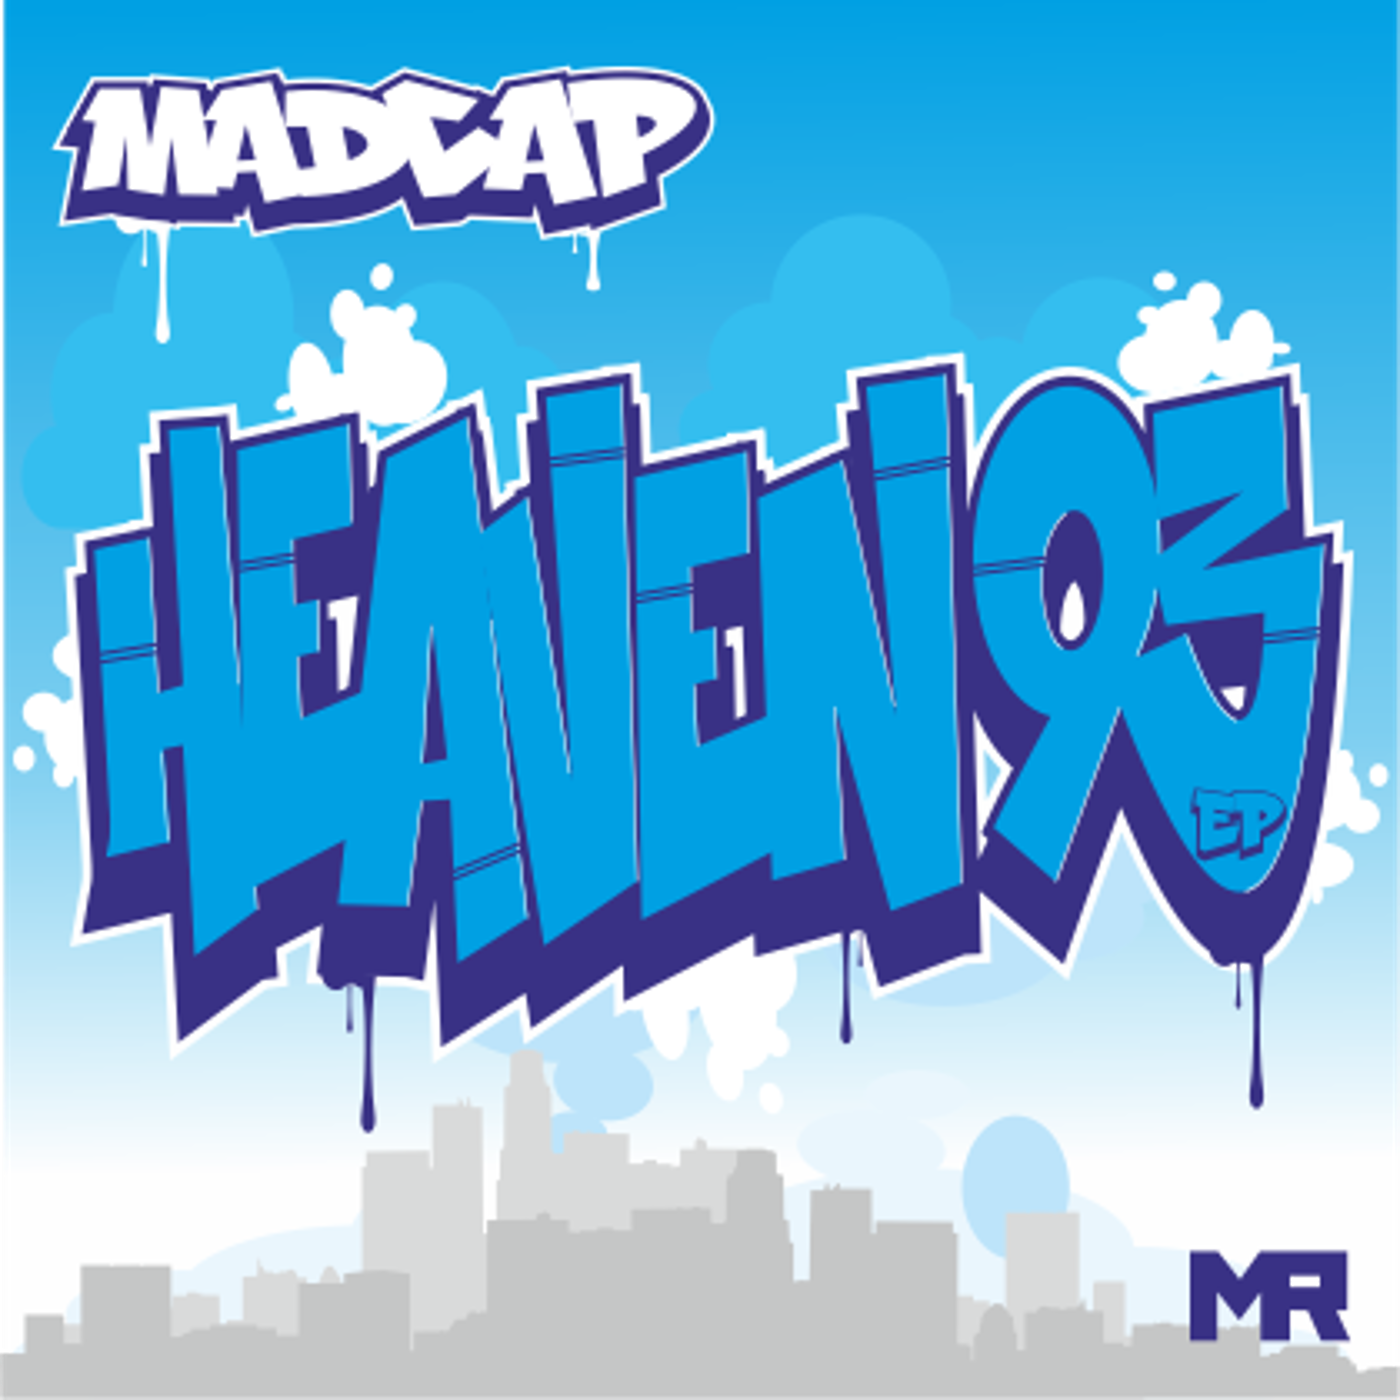 MADCAP 'HEAVENS 93' 12" (BLUE WAX) [EXCLUSIVE]